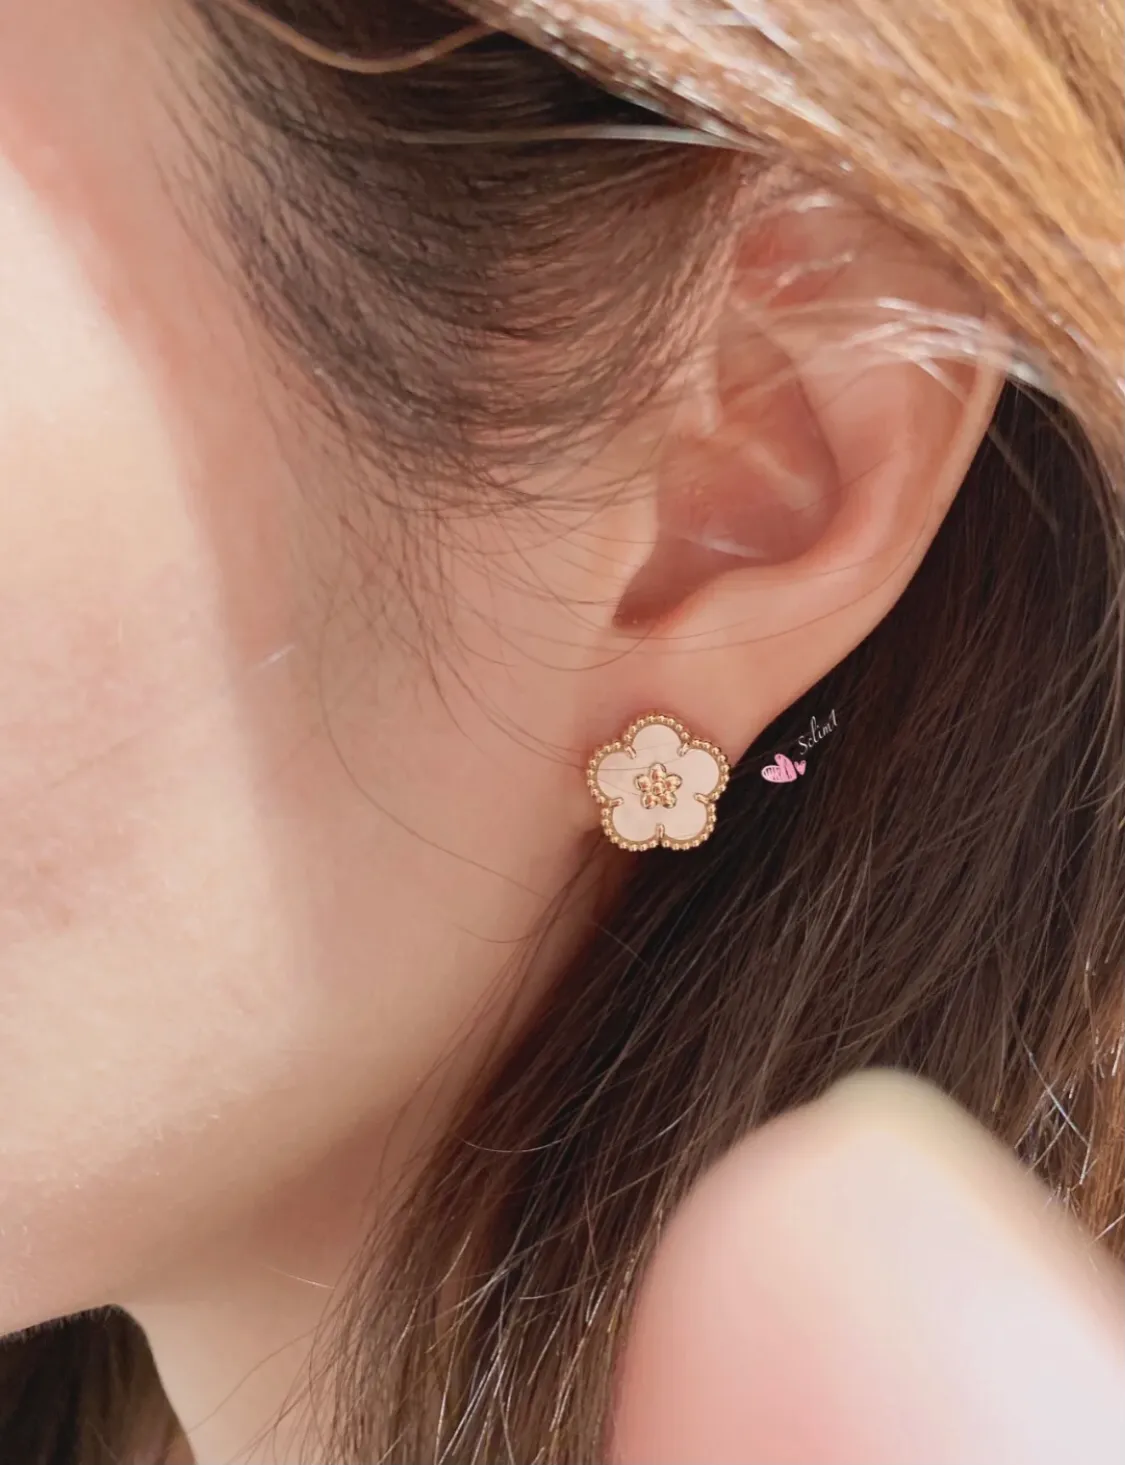 Lady Stud Earrings Designer Flower Shape Studs Earring 925 Sterling Silver Ear Ring for Women Superior Quality Never fade Not allergic